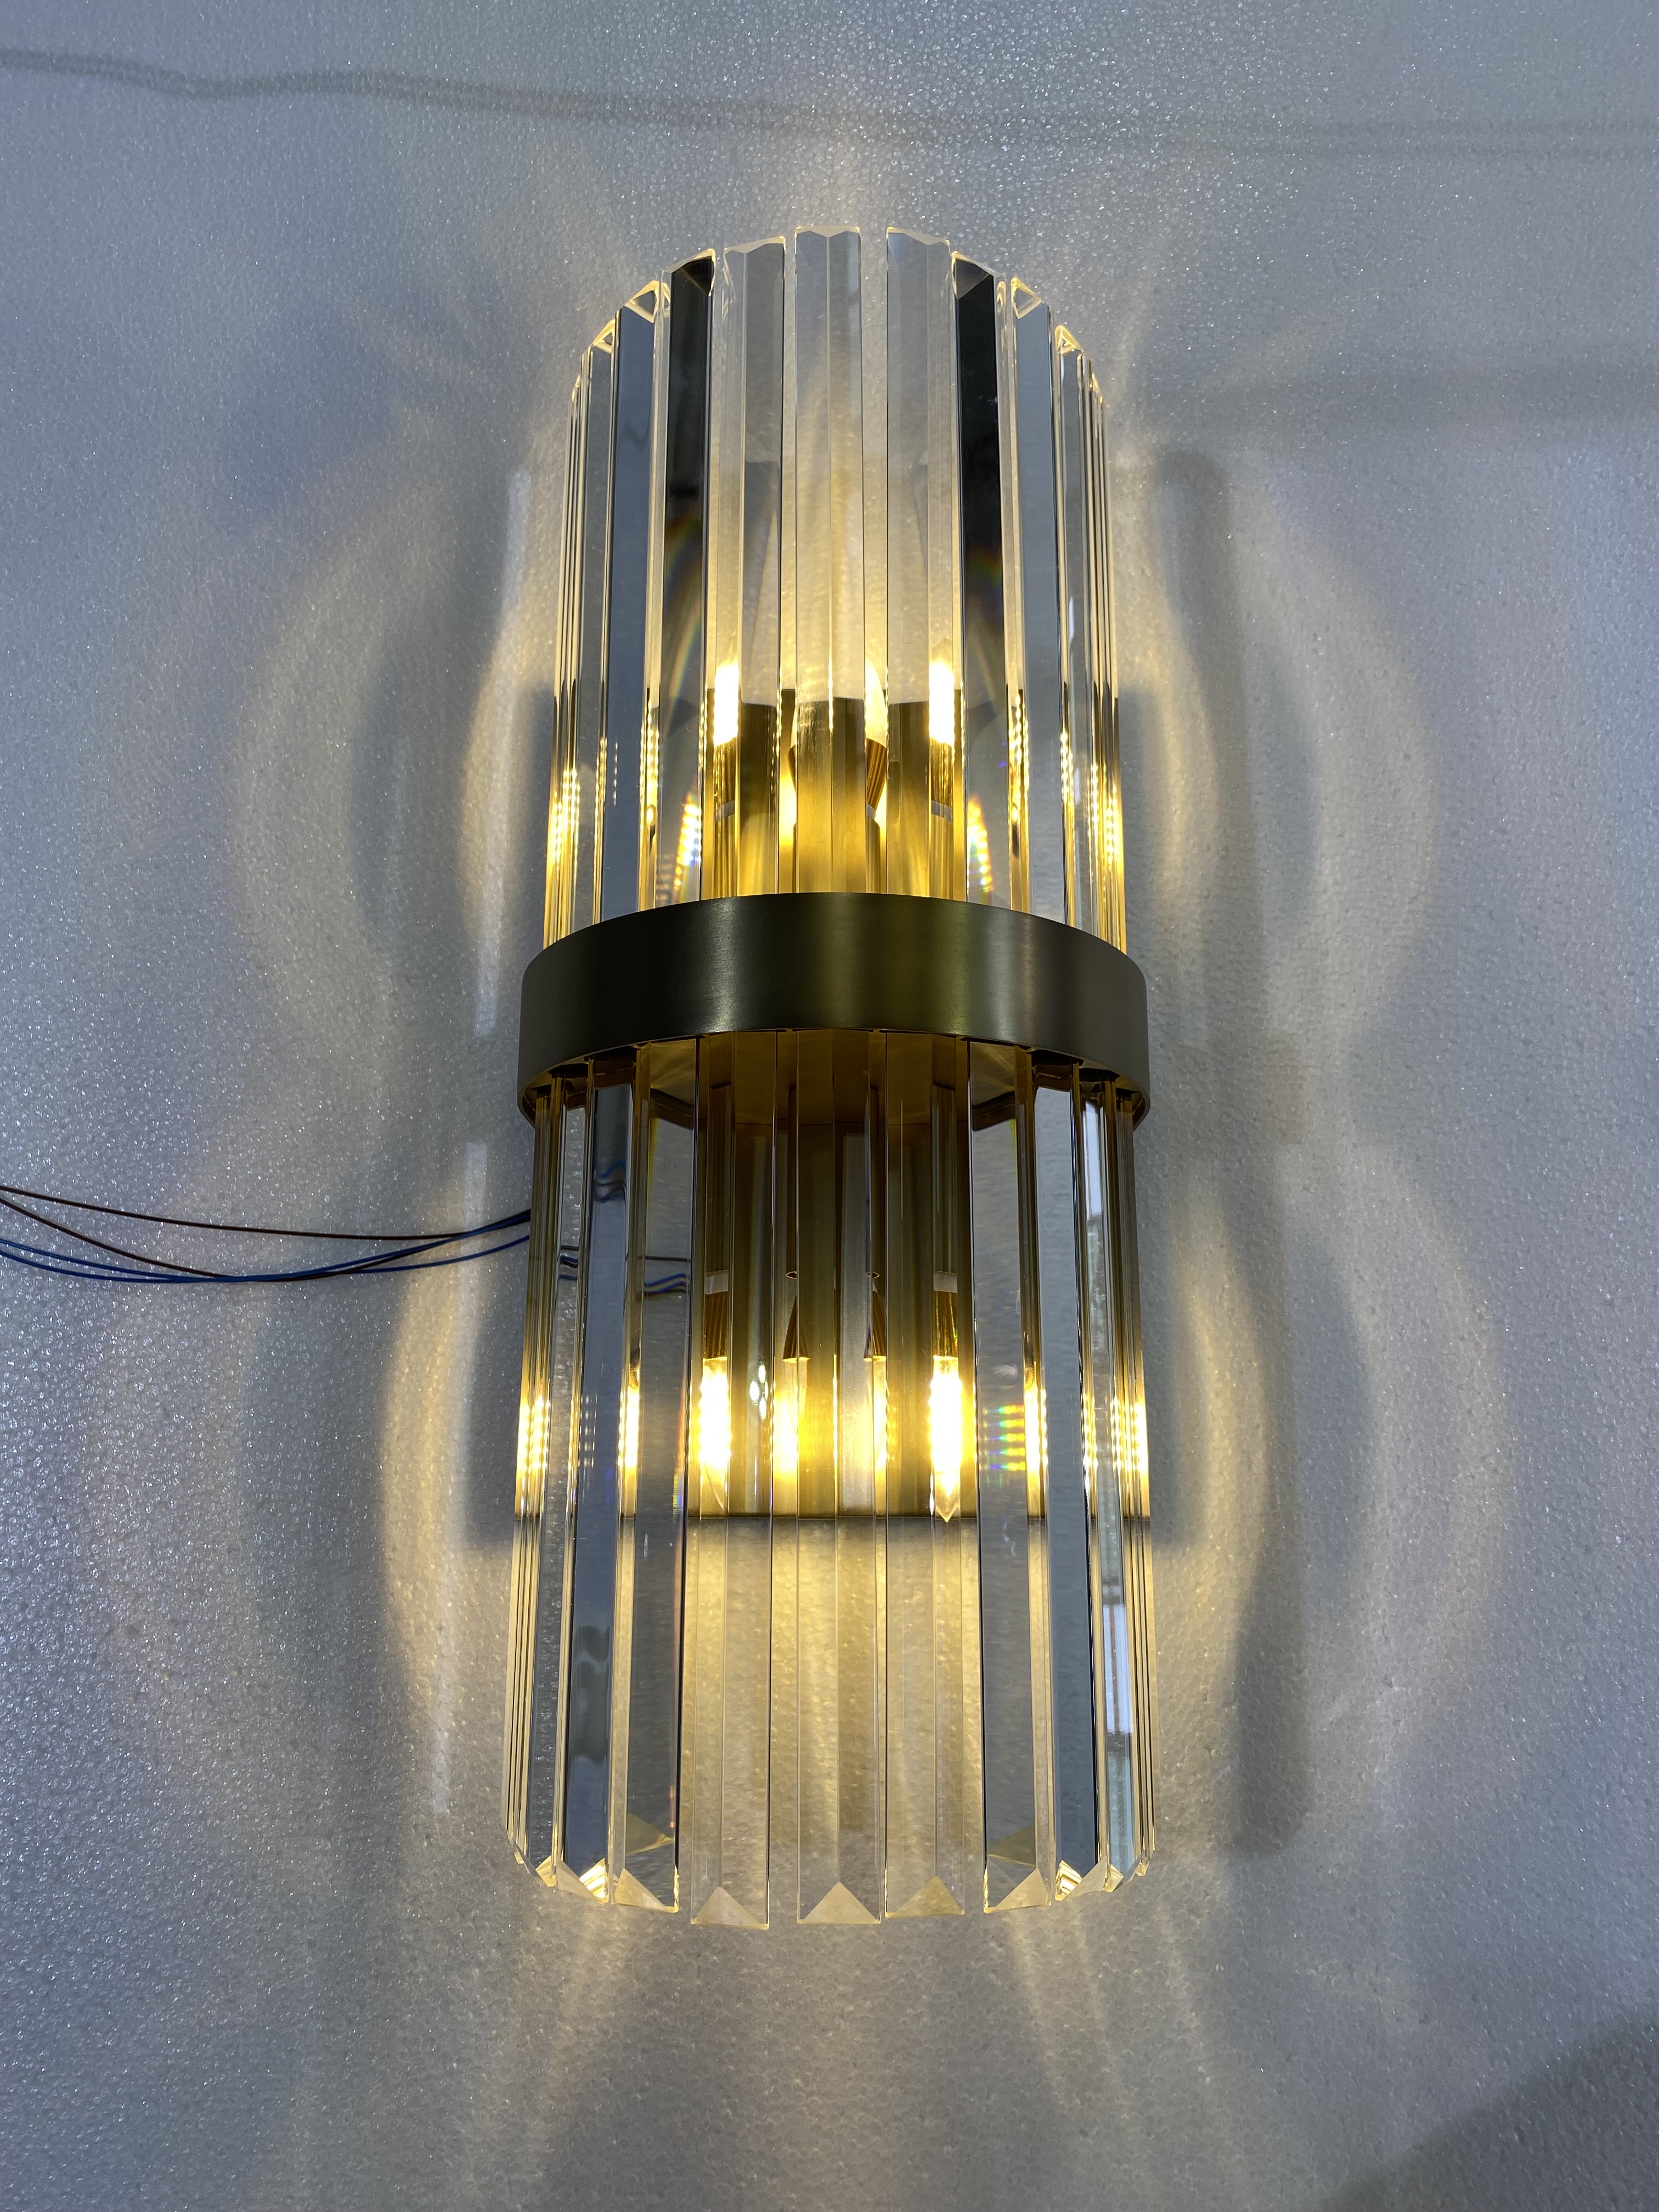 Fancy Classical Design Crystal Glass Metal Wall Light in Villa (KIZ-65W)